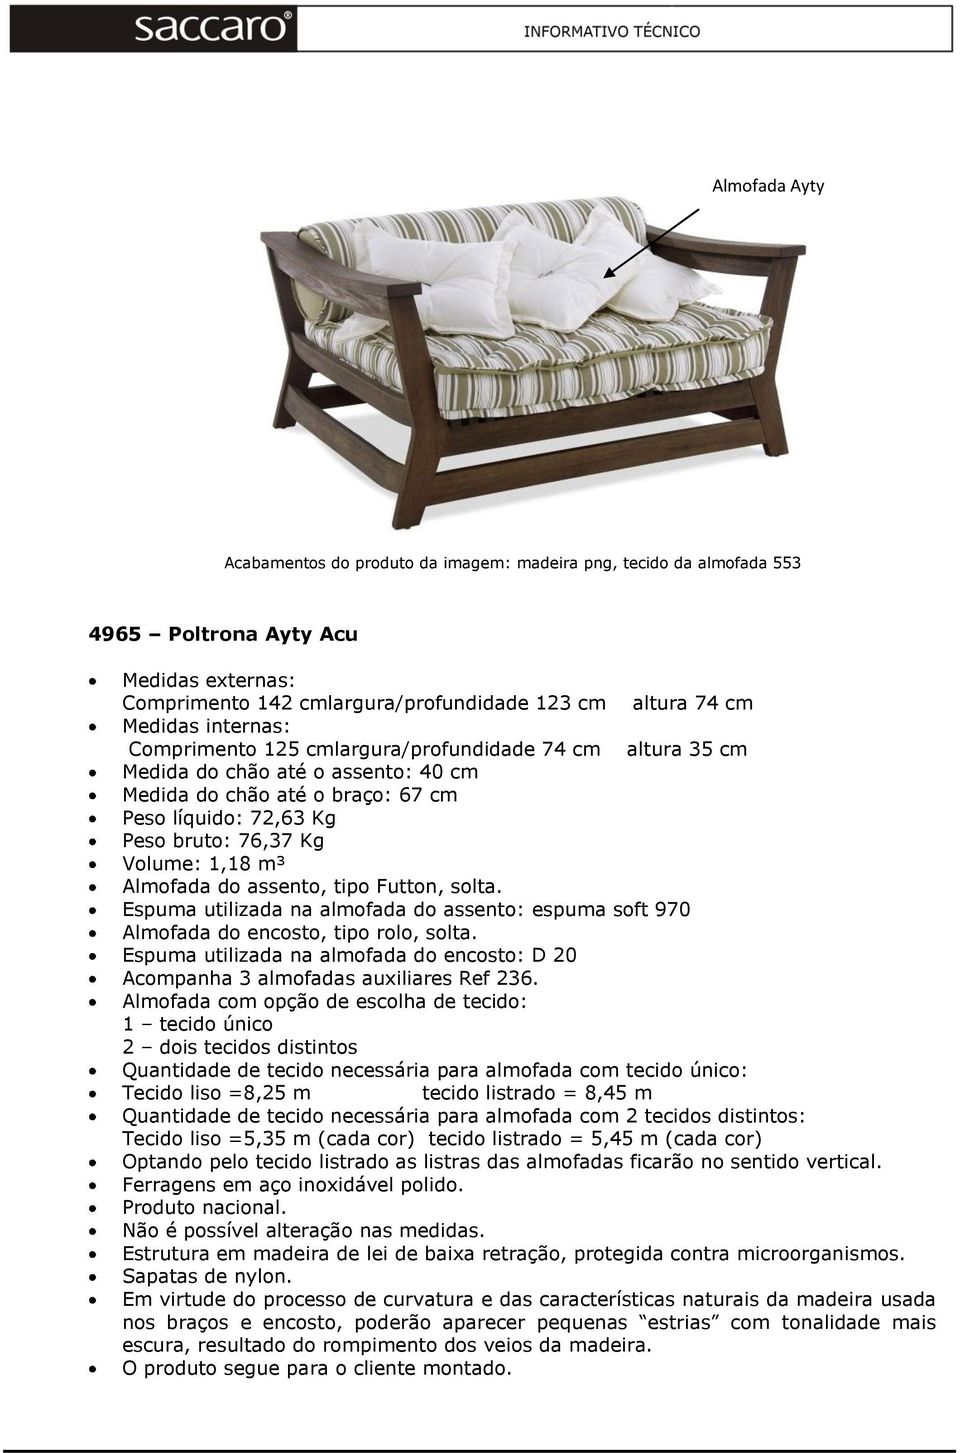 Futton, solta. Espuma utilizada na almofada do assento: espuma soft 970 Almofada do encosto, tipo rolo, solta. Espuma utilizada na almofada do encosto: D 20 Acompanha 3 almofadas auxiliares Ref 236.